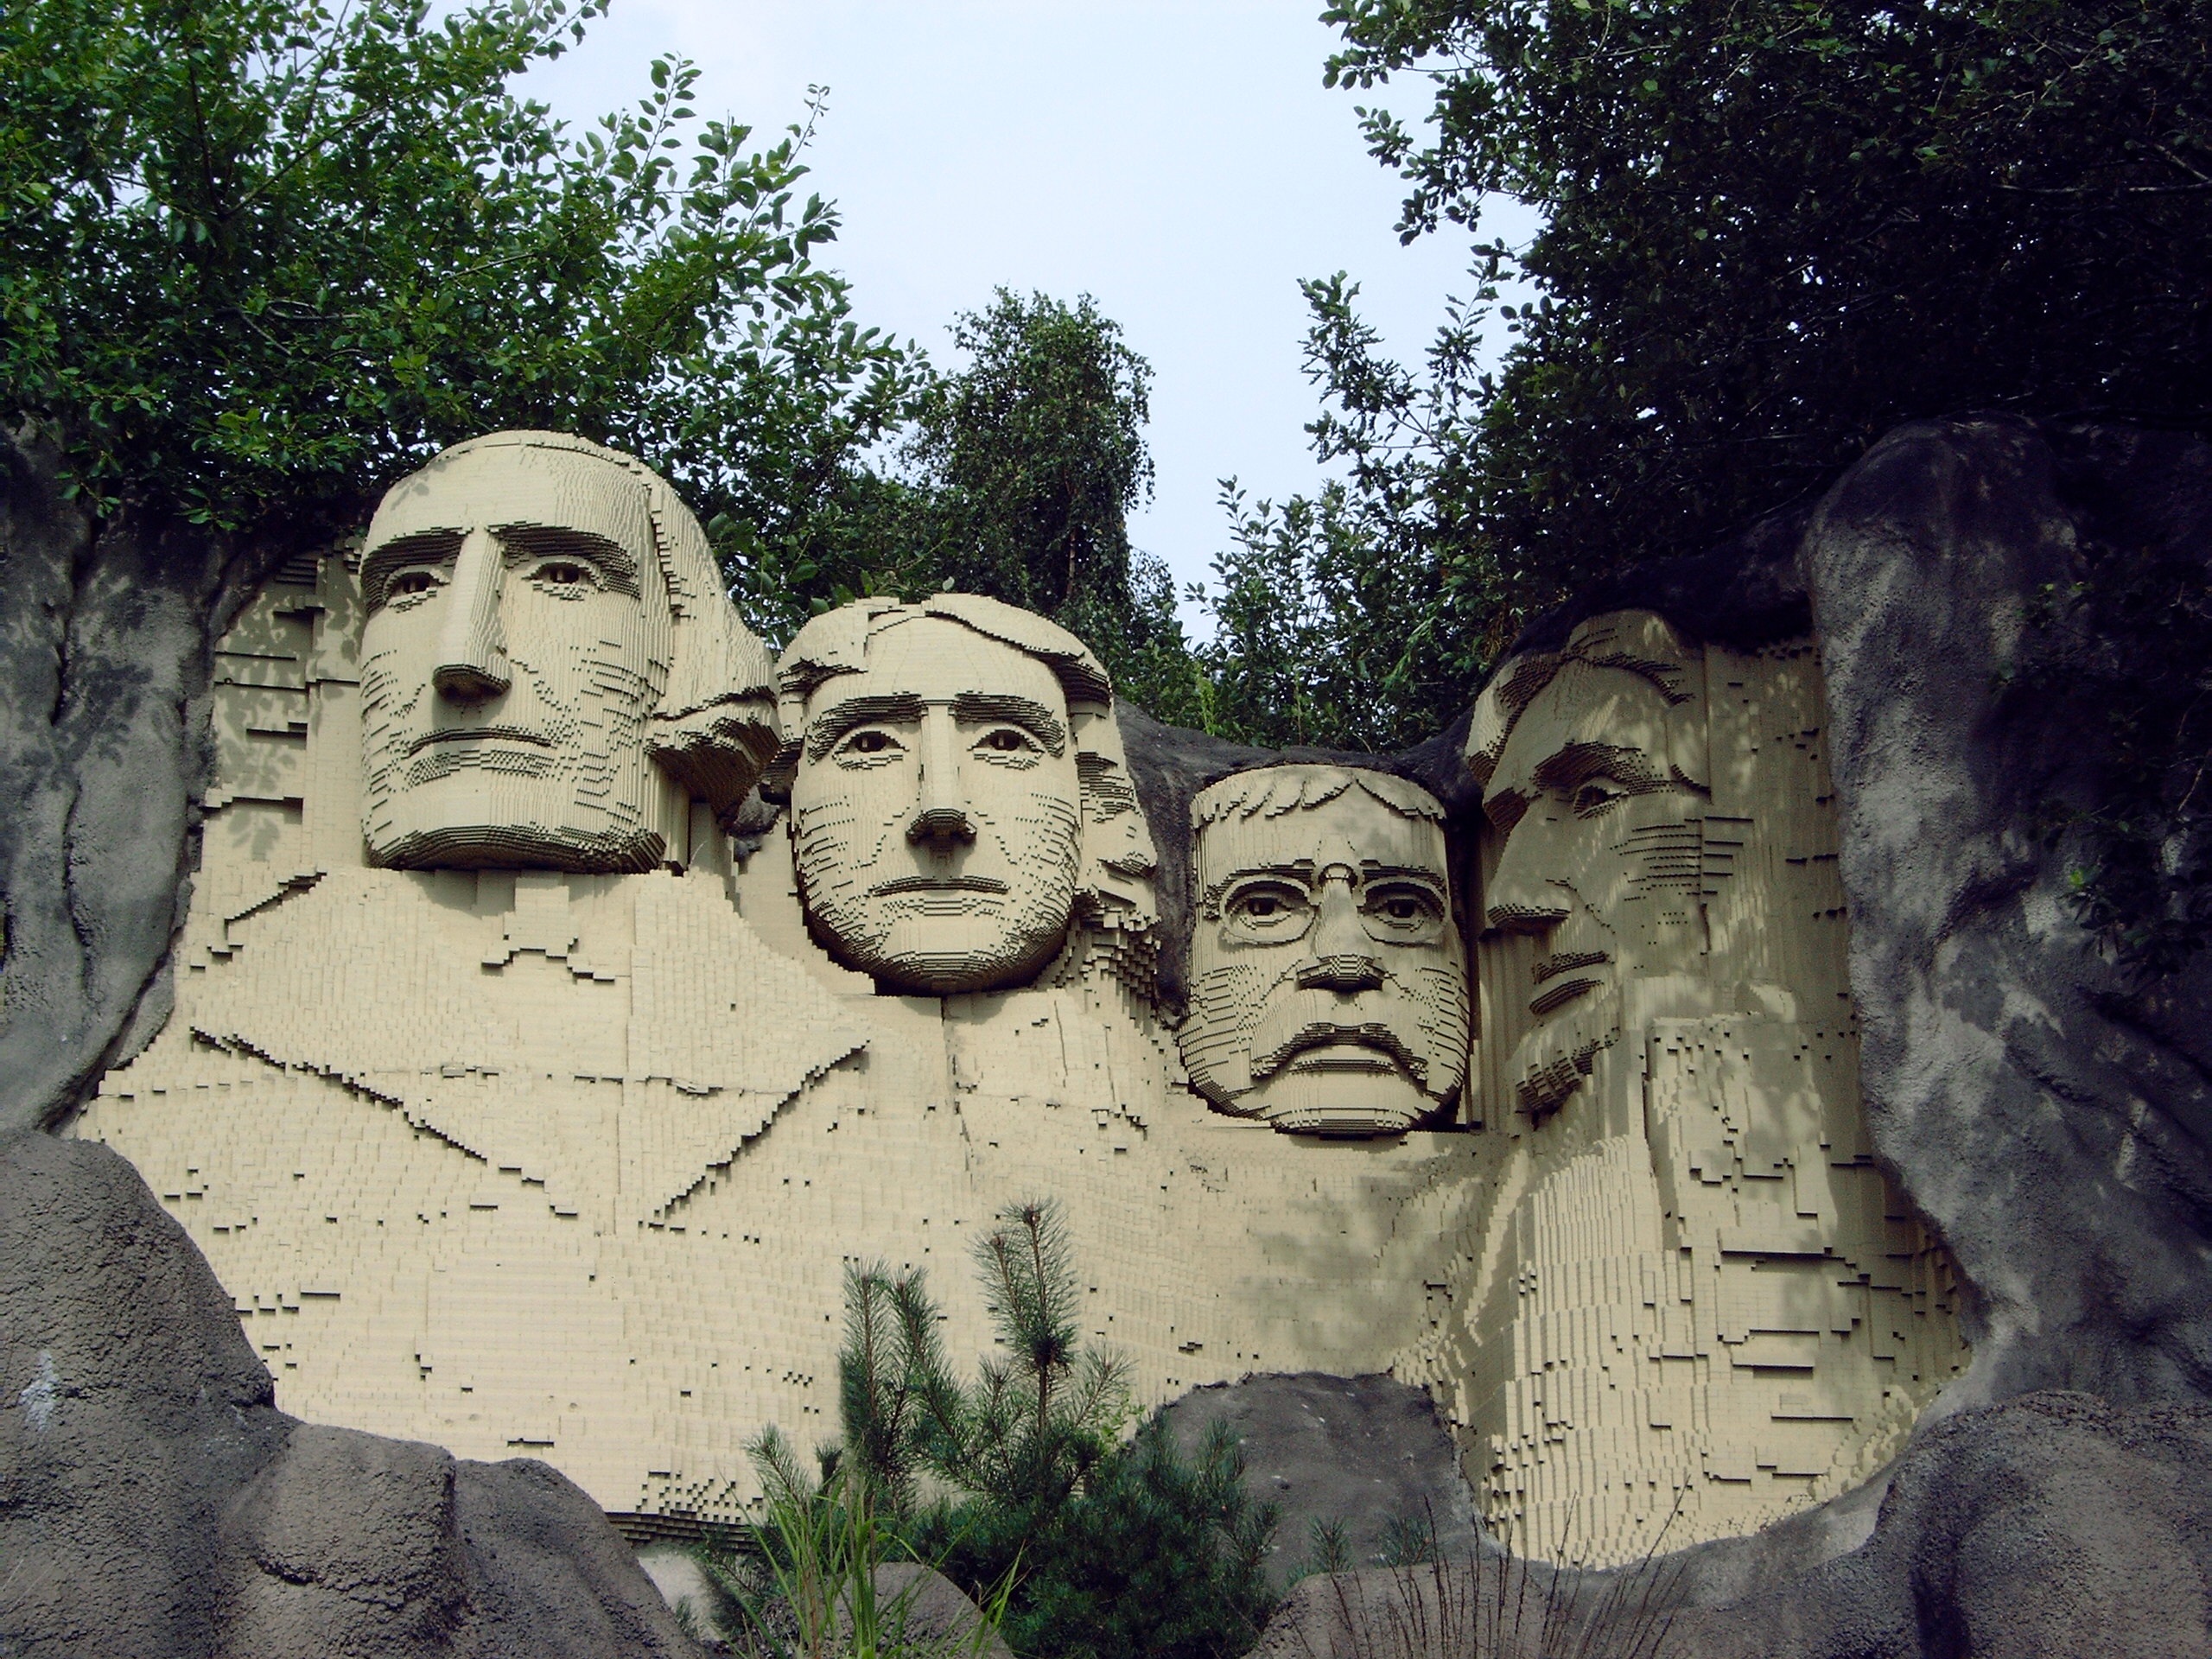 Mount Rushmore in legoblokjes - Legoland Billund